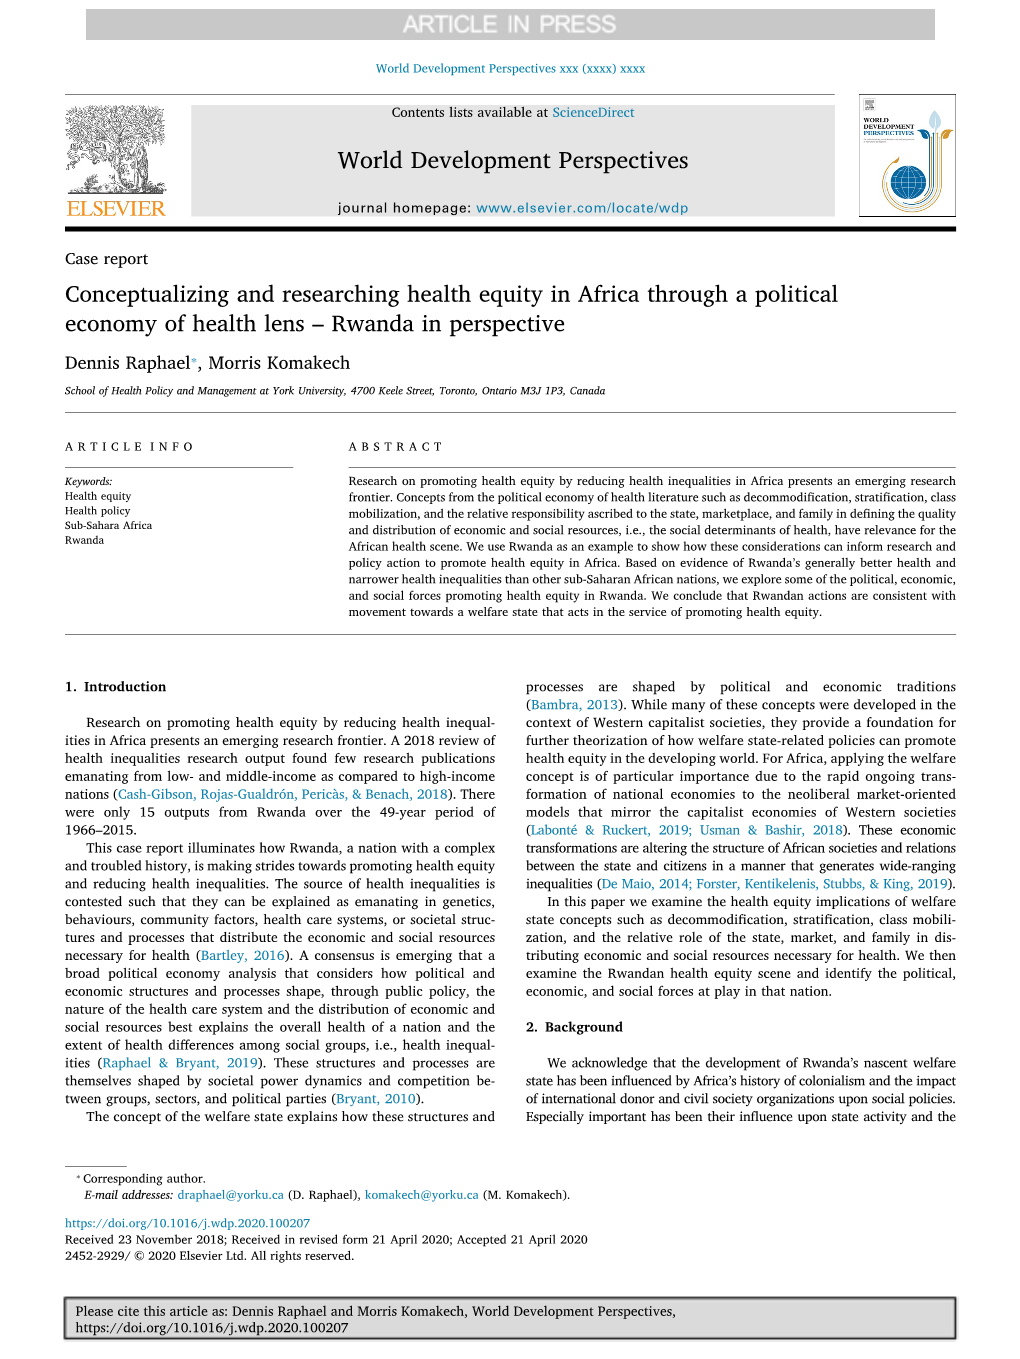 Raphael-Komakech-Conceptualizing-Health-Equity-Rwanda-Perspective.Pdf